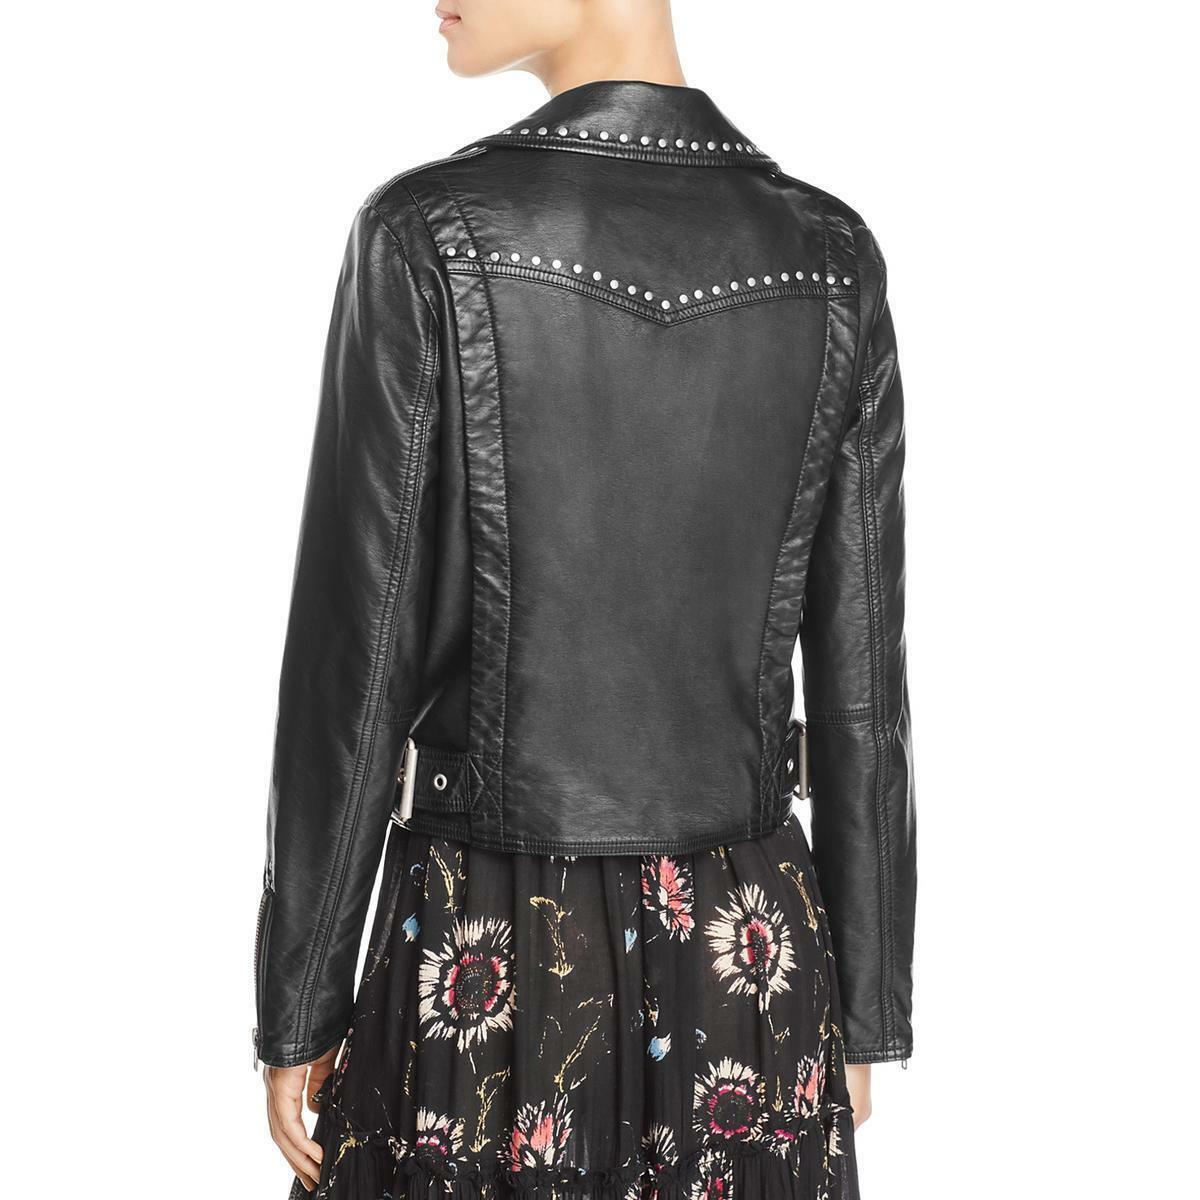 $198 Free People Womens Faux Leather Studded Motorcycle Jacket Black, Large NWOT - Luxurena Leather